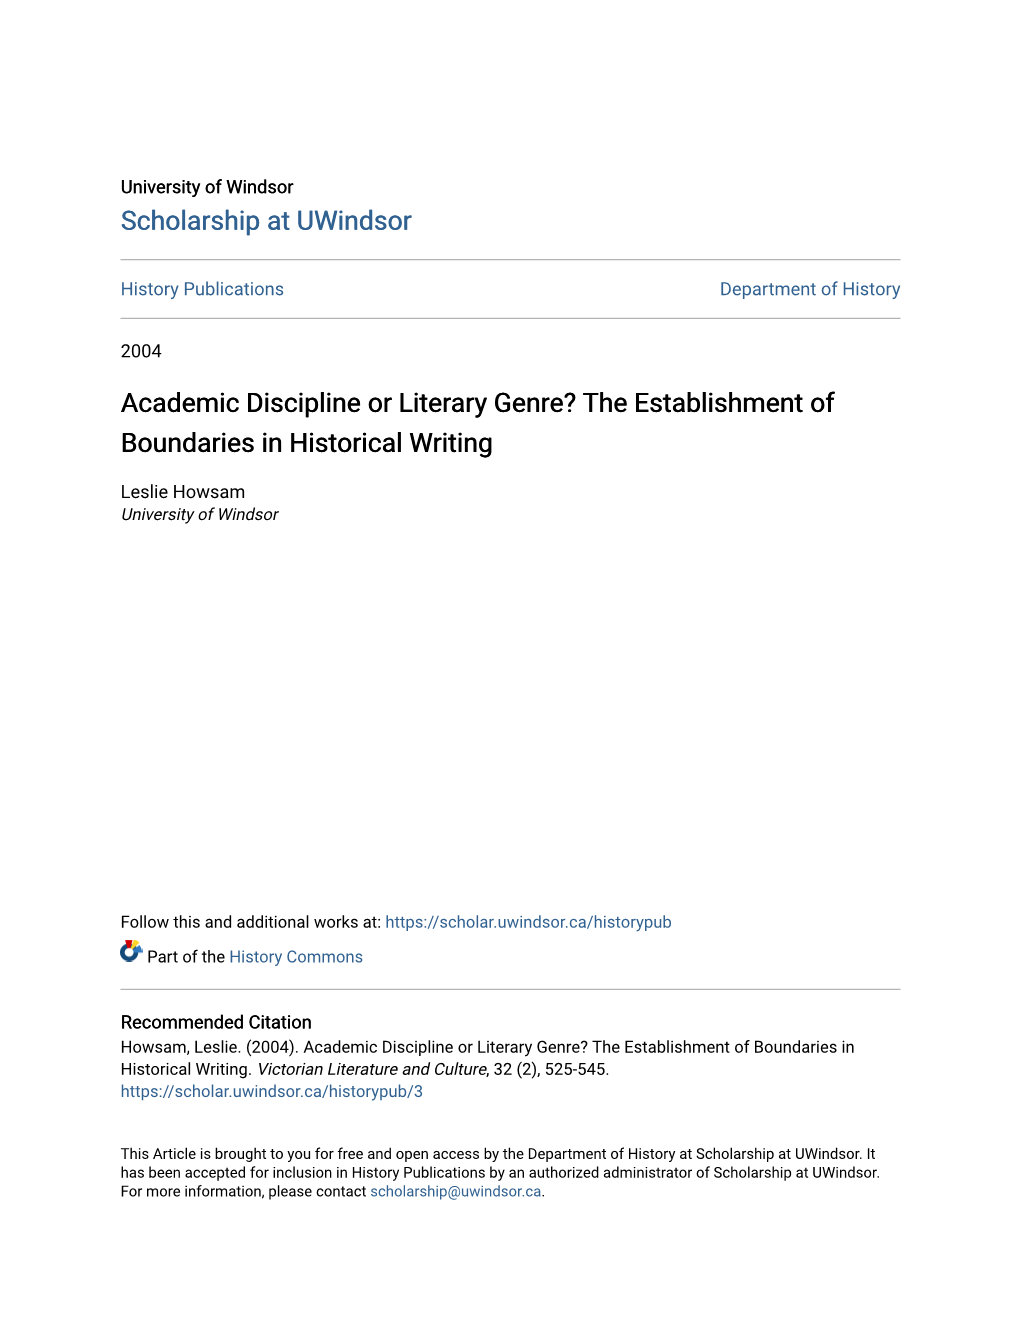 Academic Discipline Or Literary Genre? the Establishment of Boundaries in Historical Writing